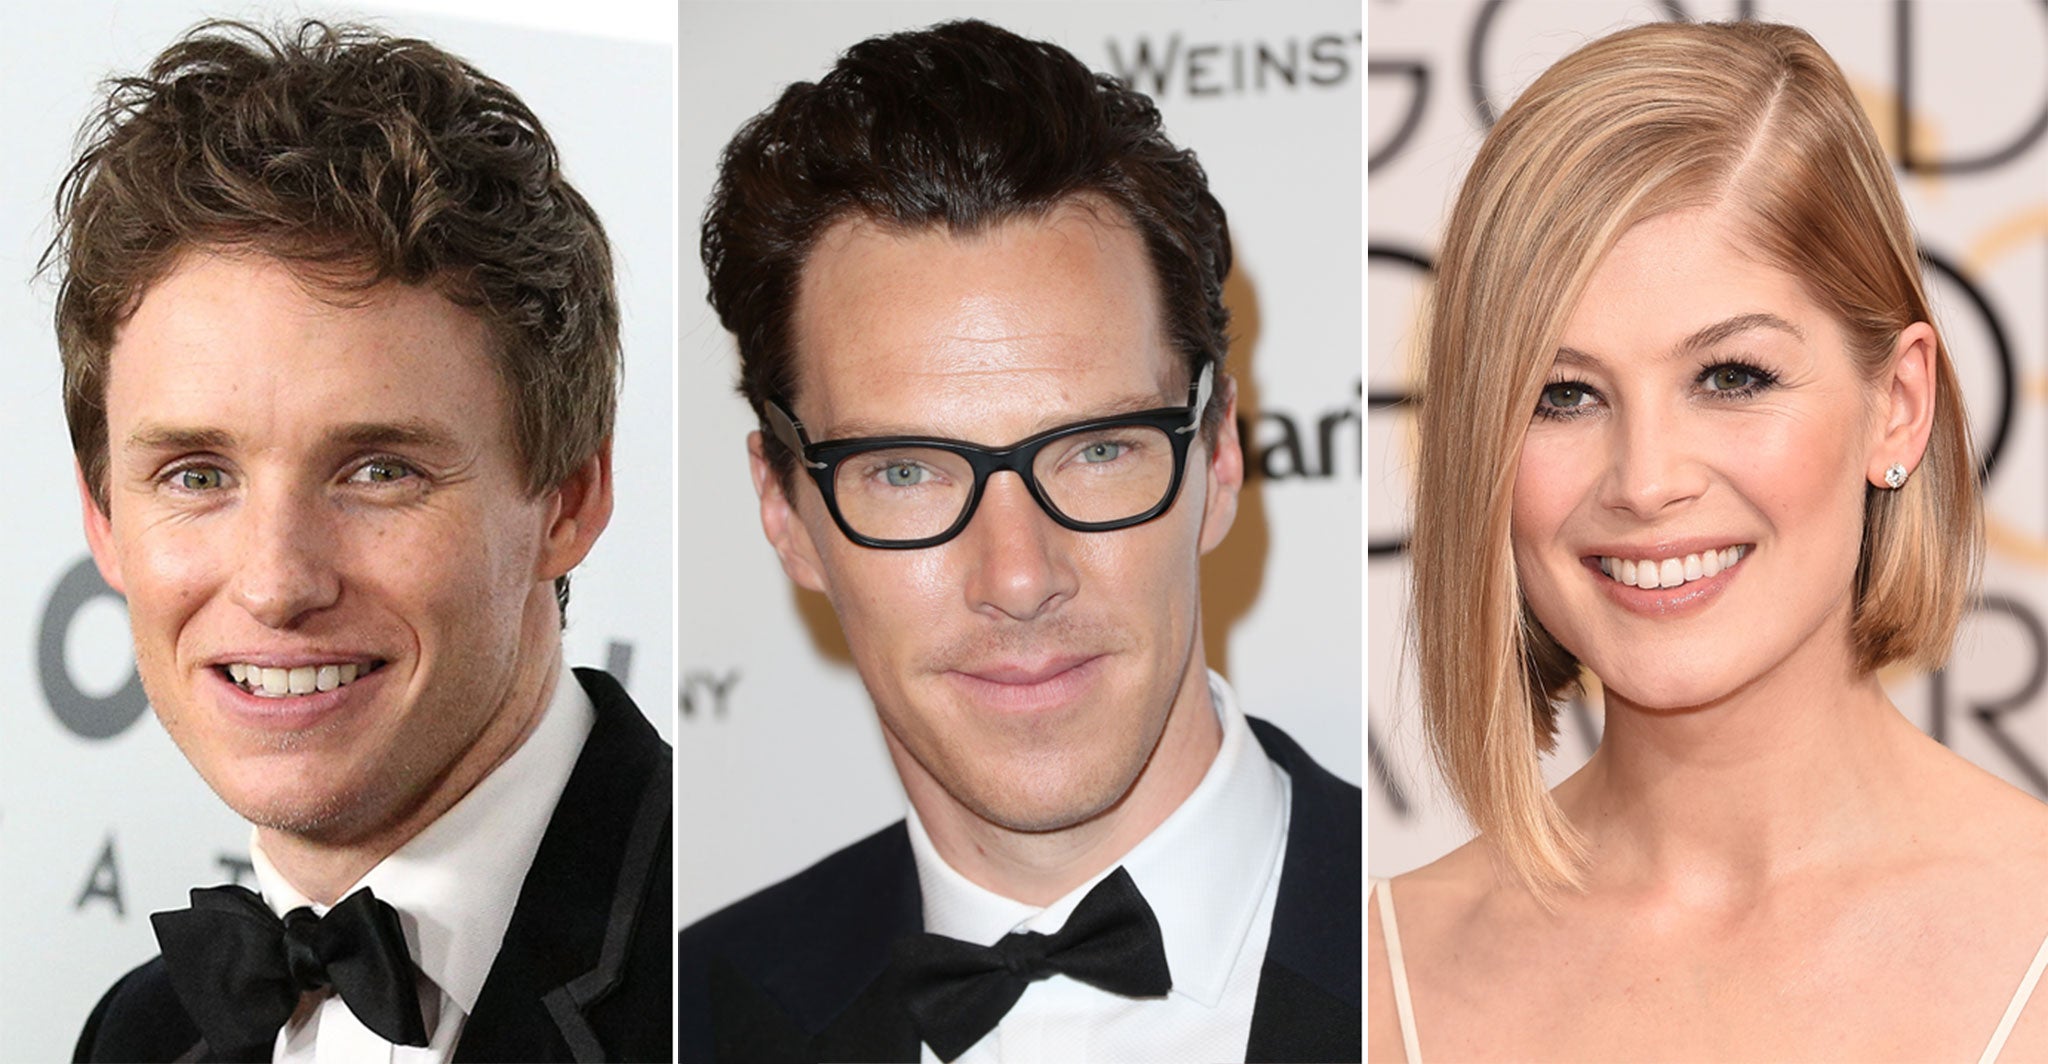 British hopefuls Eddie Redmayne, Benedict Cumberbatch and Rosamund Pike can expect a super posh goodie bag at the Oscars